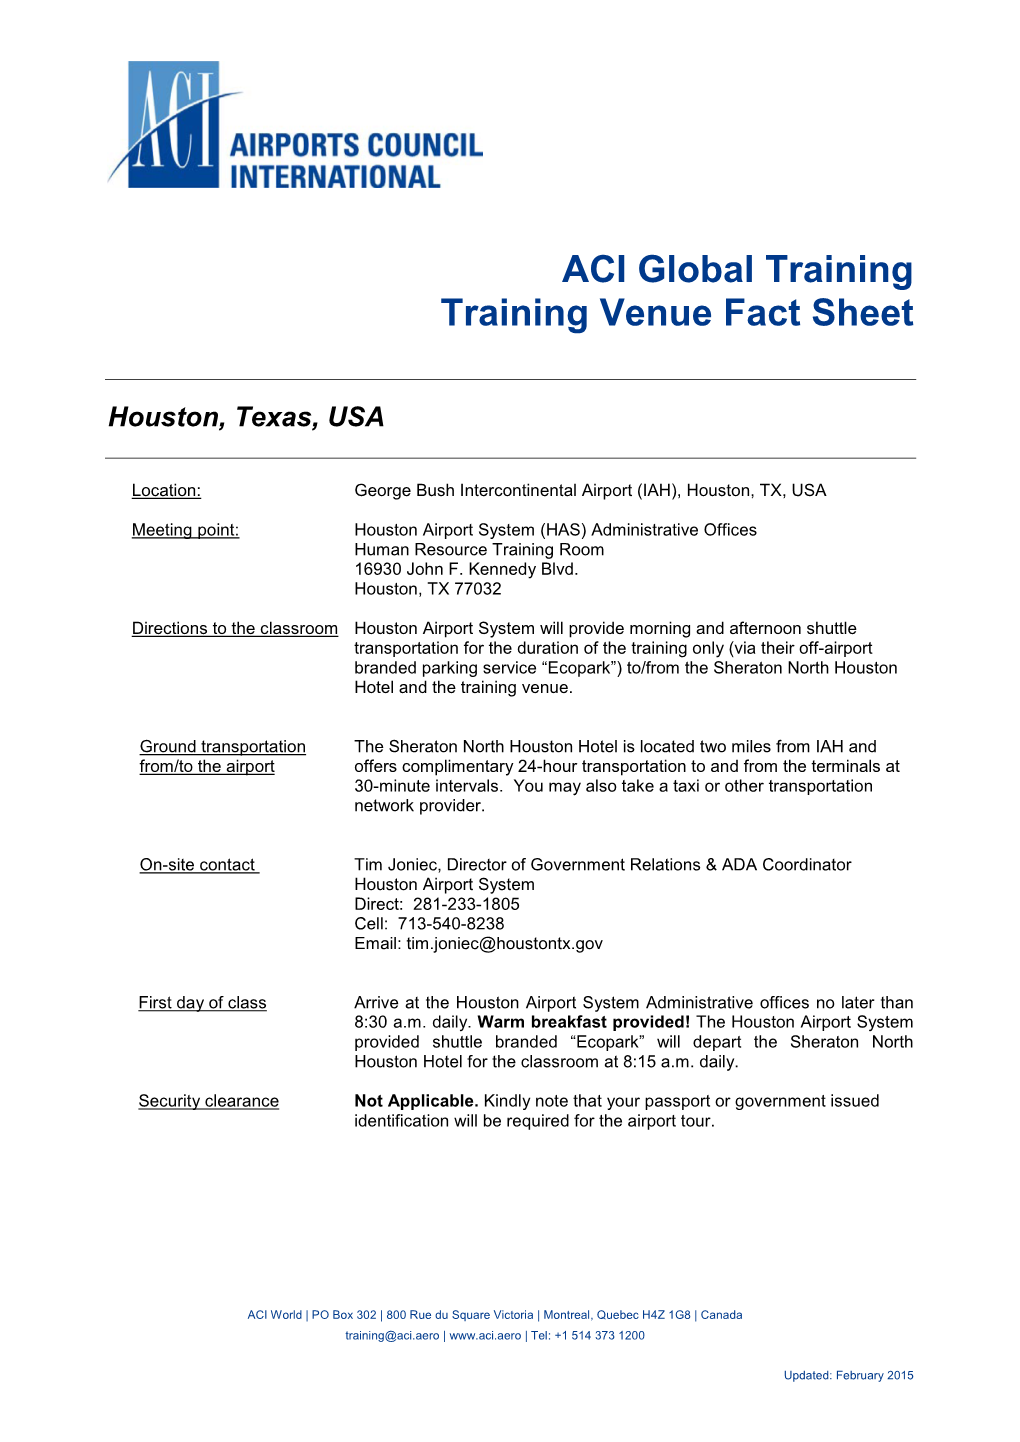 ACI Global Training Training Venue Fact Sheet Houston, Texas